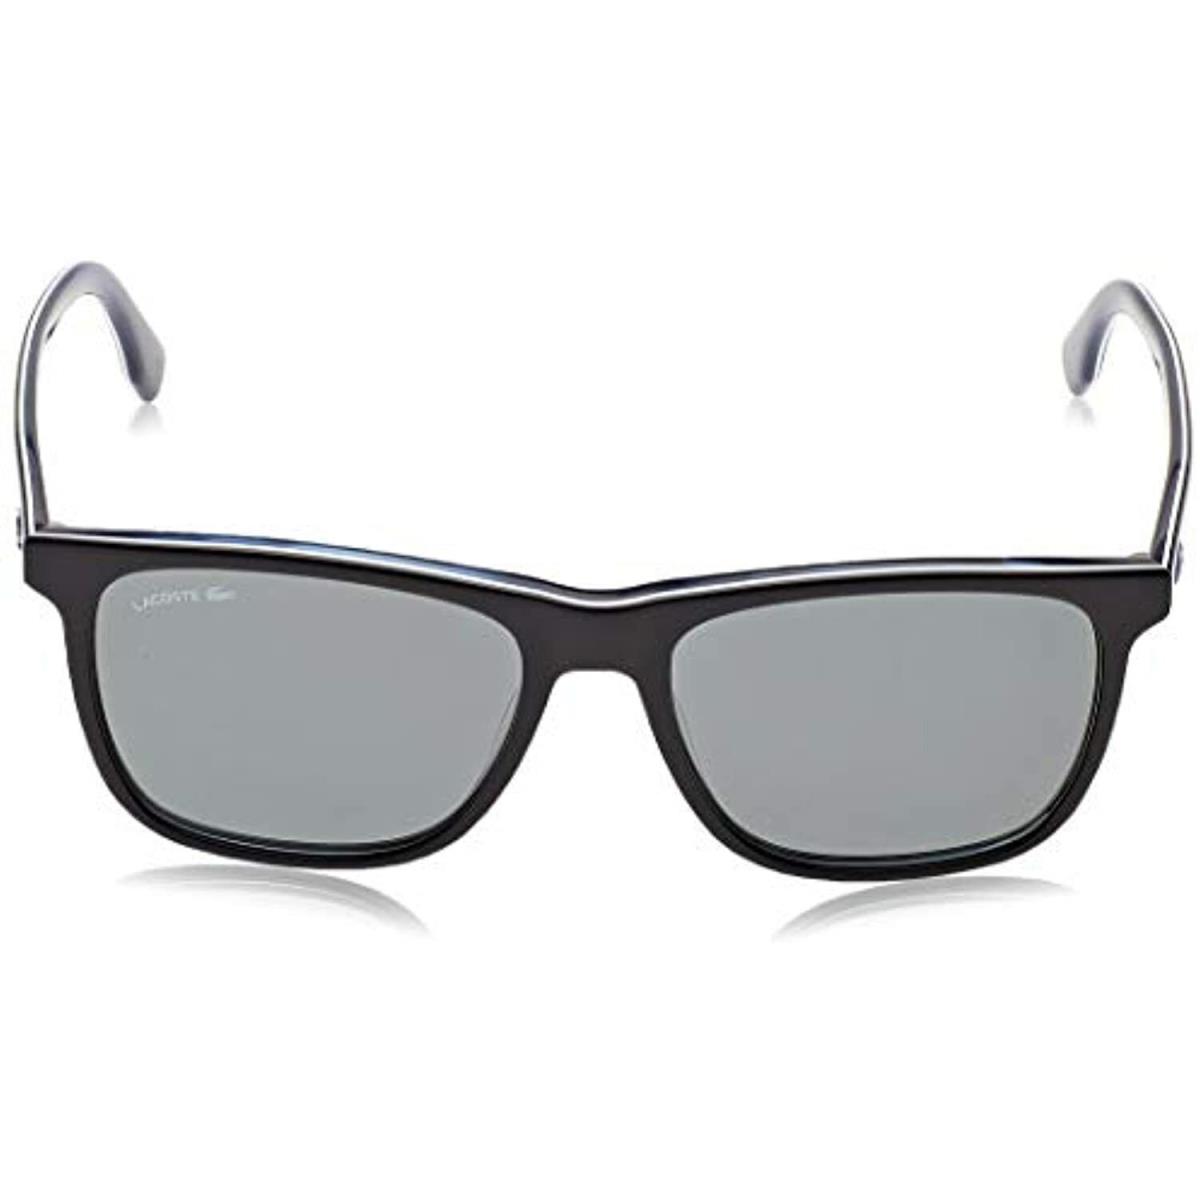 Lacoste L875SP 001 Polarized Black Blue Sunglasses 56mm with Grey Lenses